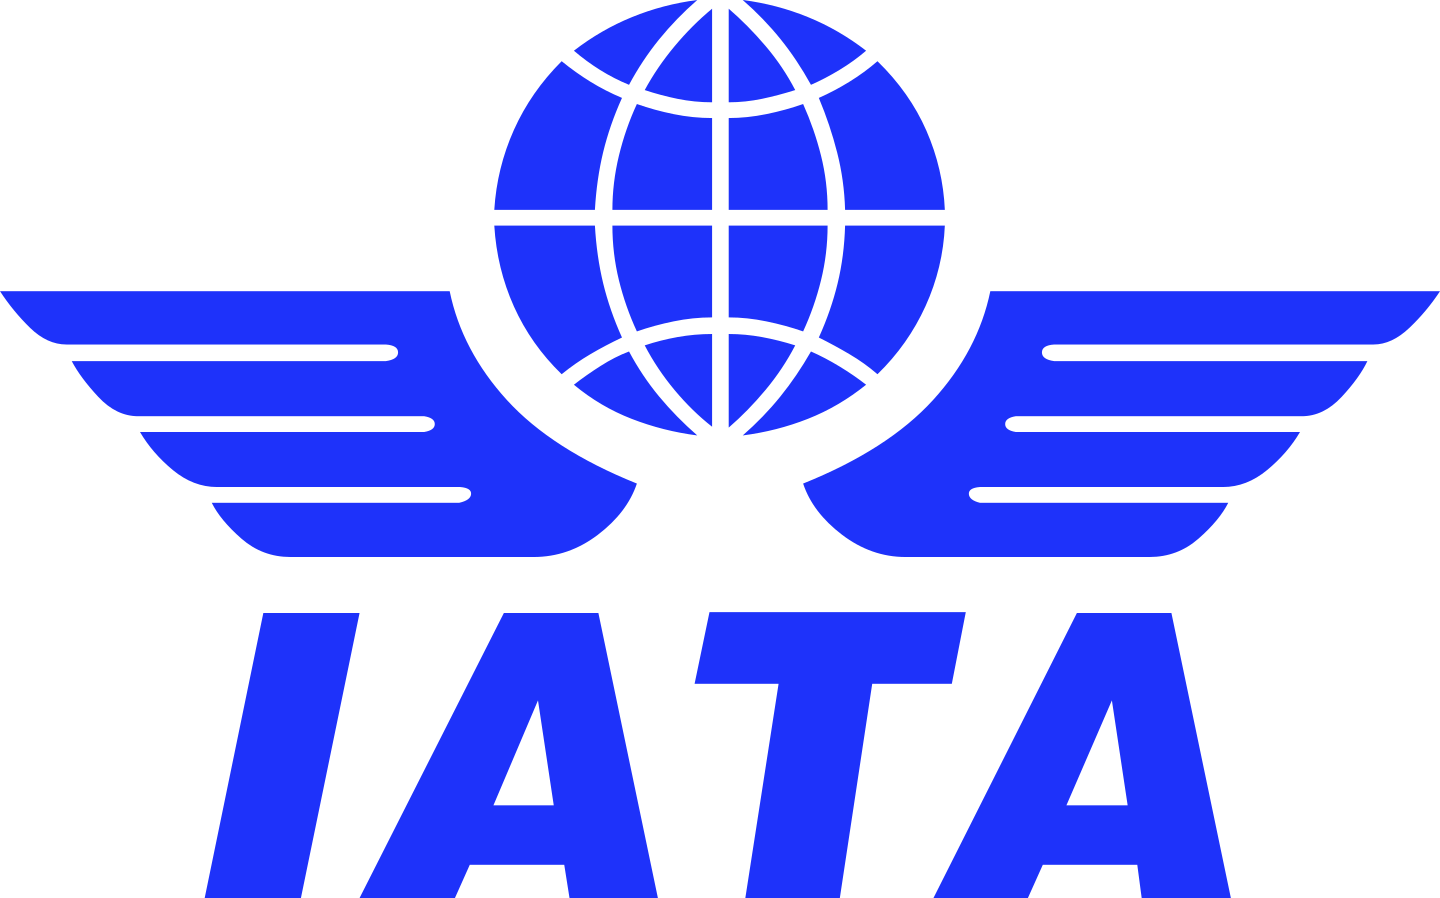 iata logo 2 1 - IATA Logo